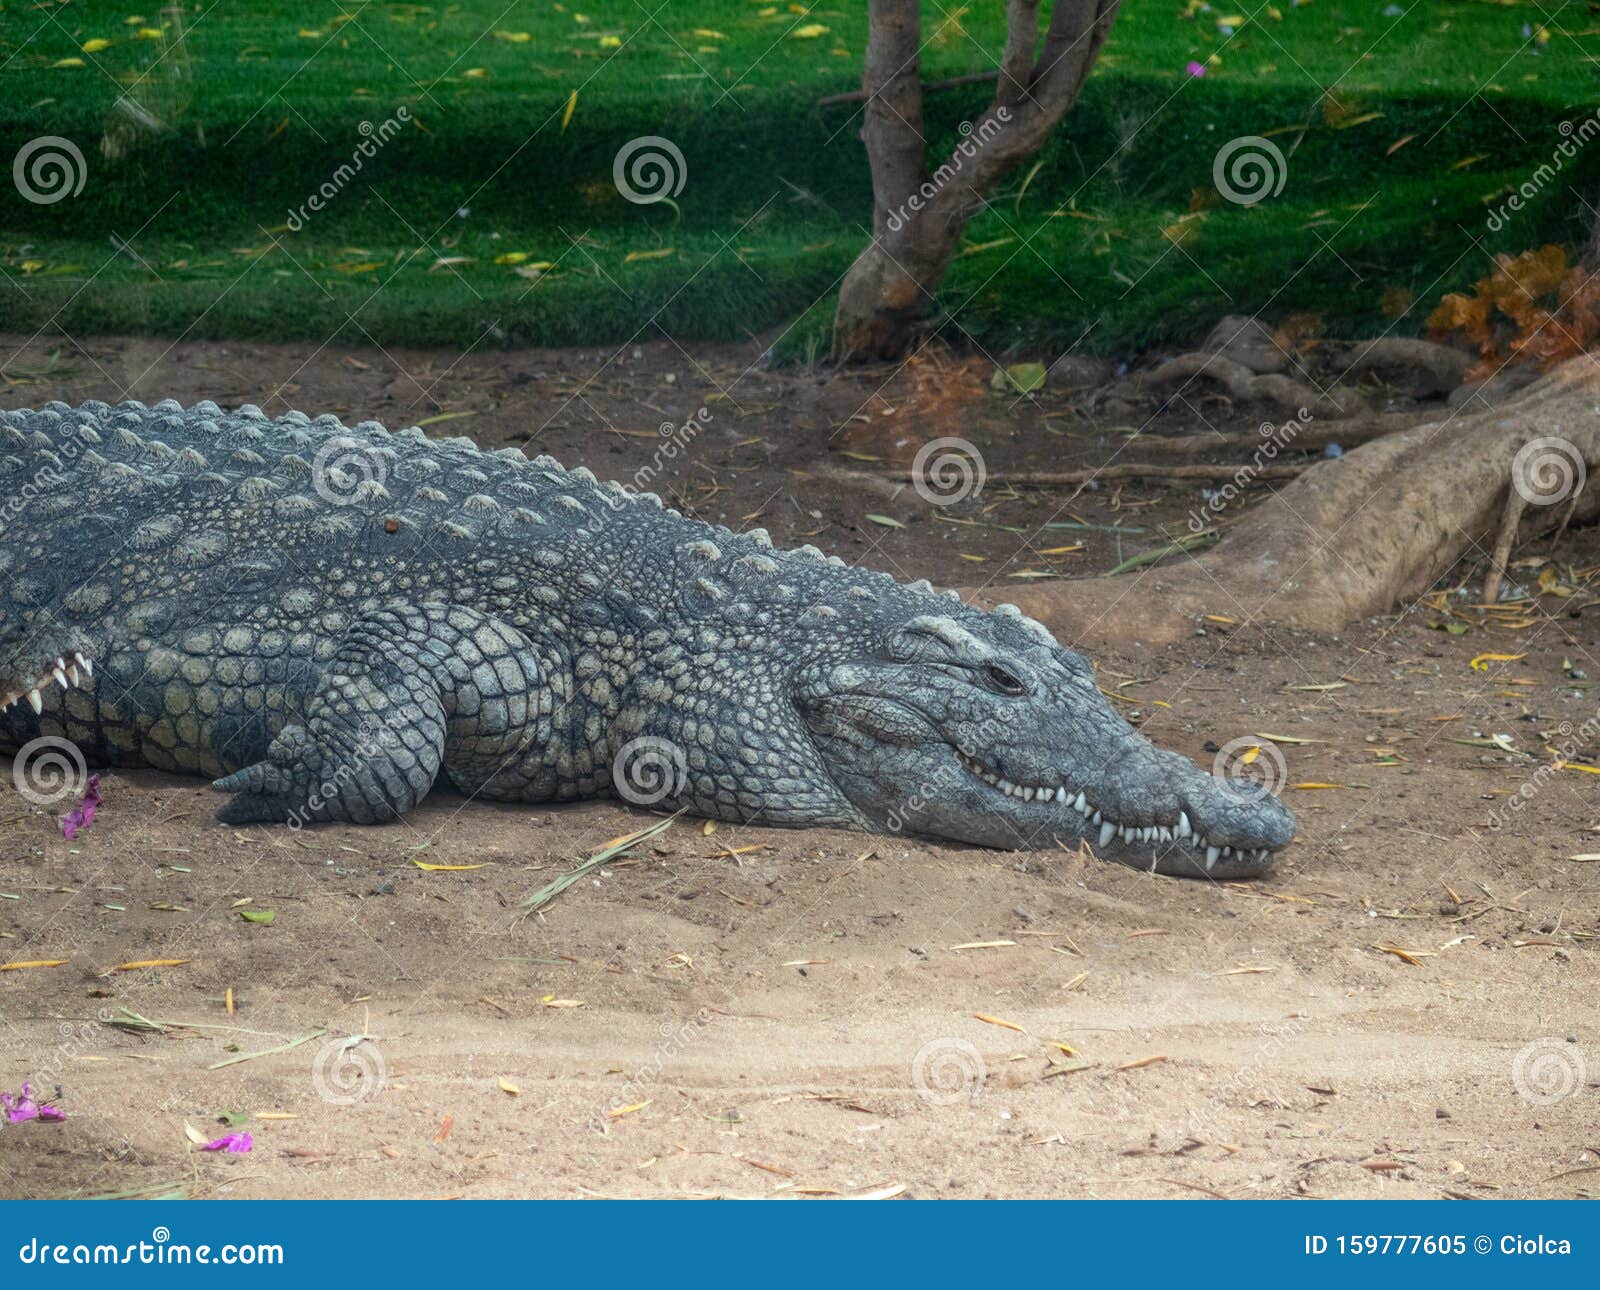 aligator at cocodrilo park, gran canaria